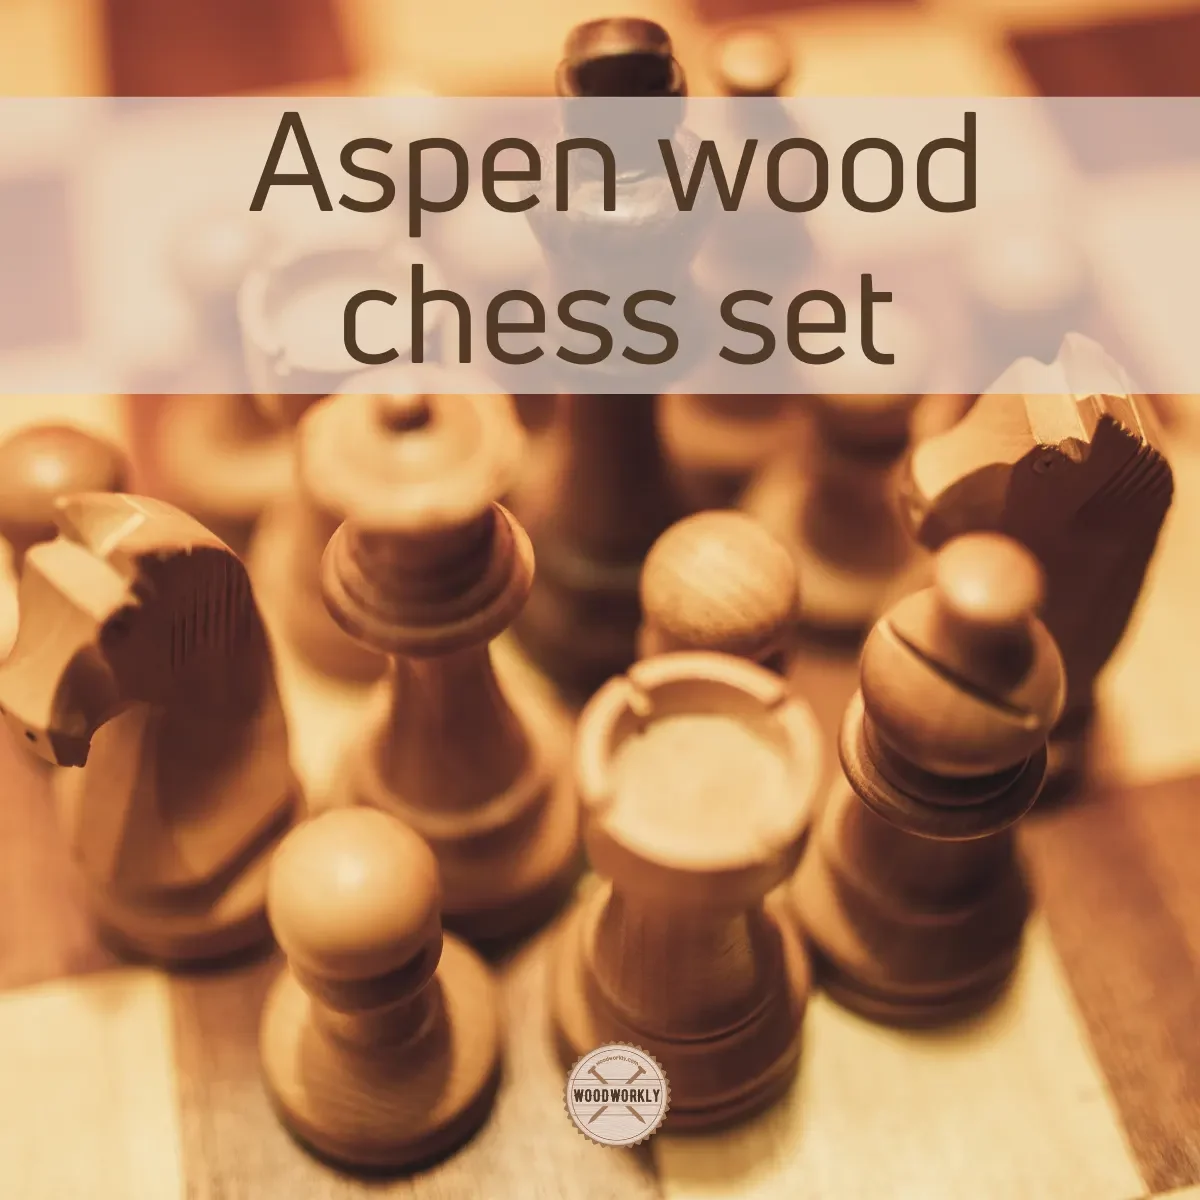 Aspen wood chess set